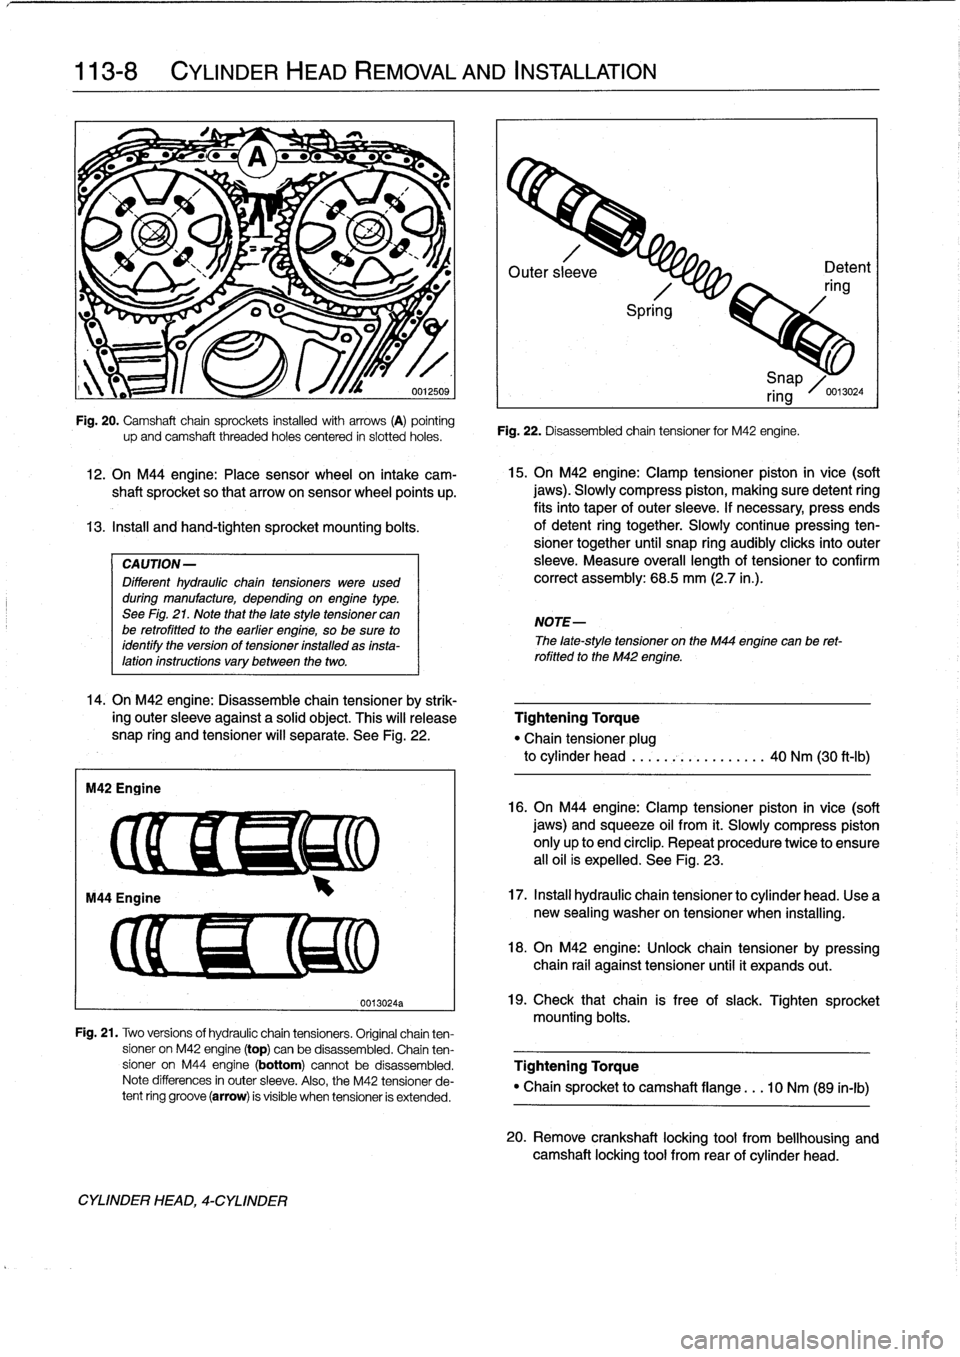 BMW 323i 1993 E36 Workshop Manual 
113-8

	

CYLINDER
HEAD
REMOVAL
AND
INSTALLATION

IW?
-
L
/~f
W

	

~
4r

"

-
"

	

;,s
1

12
.
On
M44
engine
:
Place
sensor
wheel
on
intake
cam-
shaft
sprocket
so
that
arrowon
sensor
wheel
points
